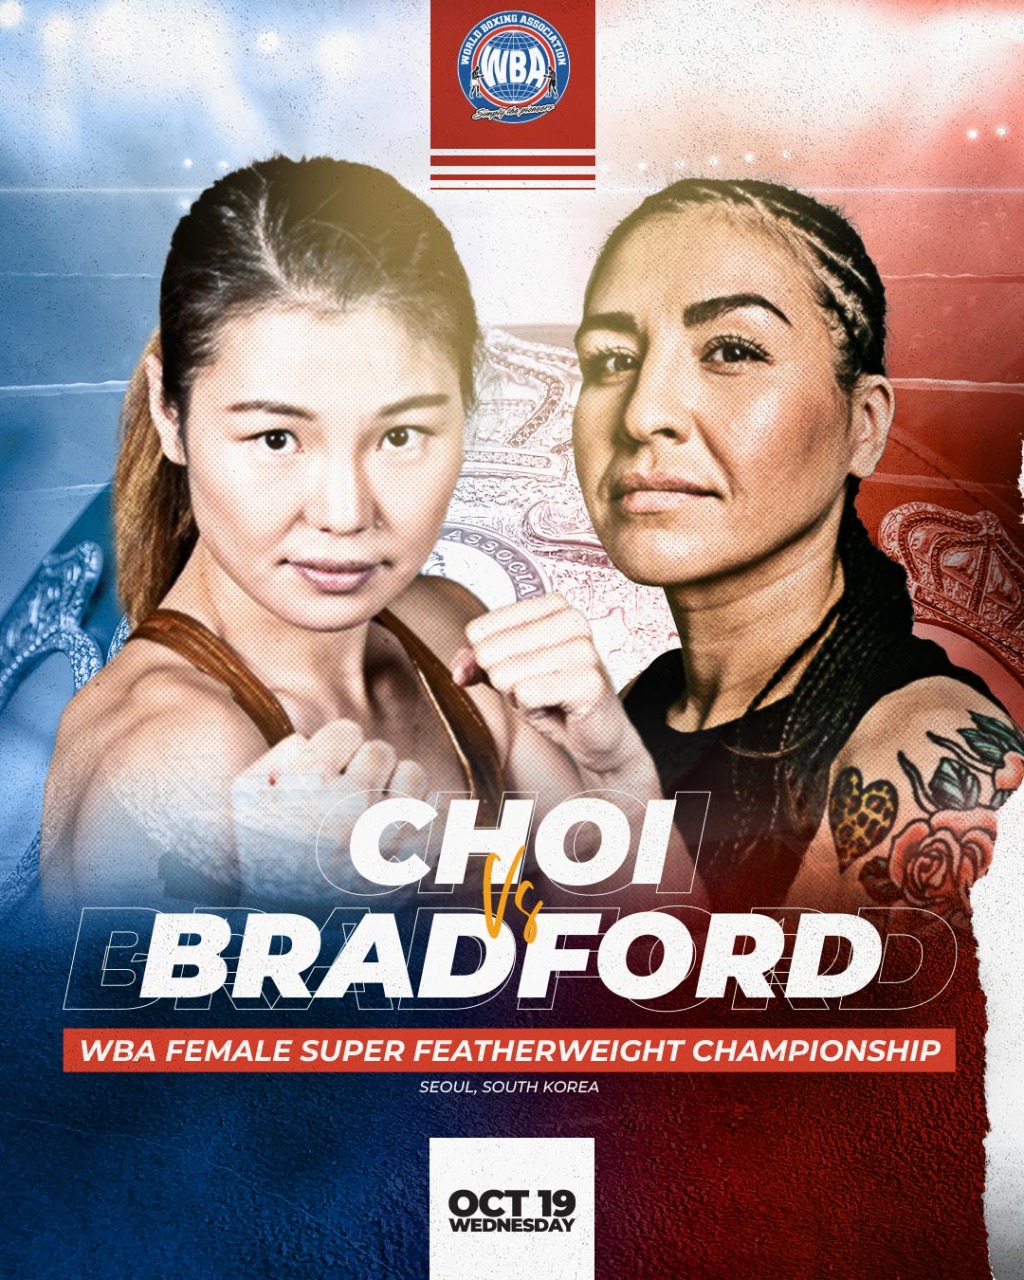 Choi-Bradford on Wednesday in Seoul for the WBA belt